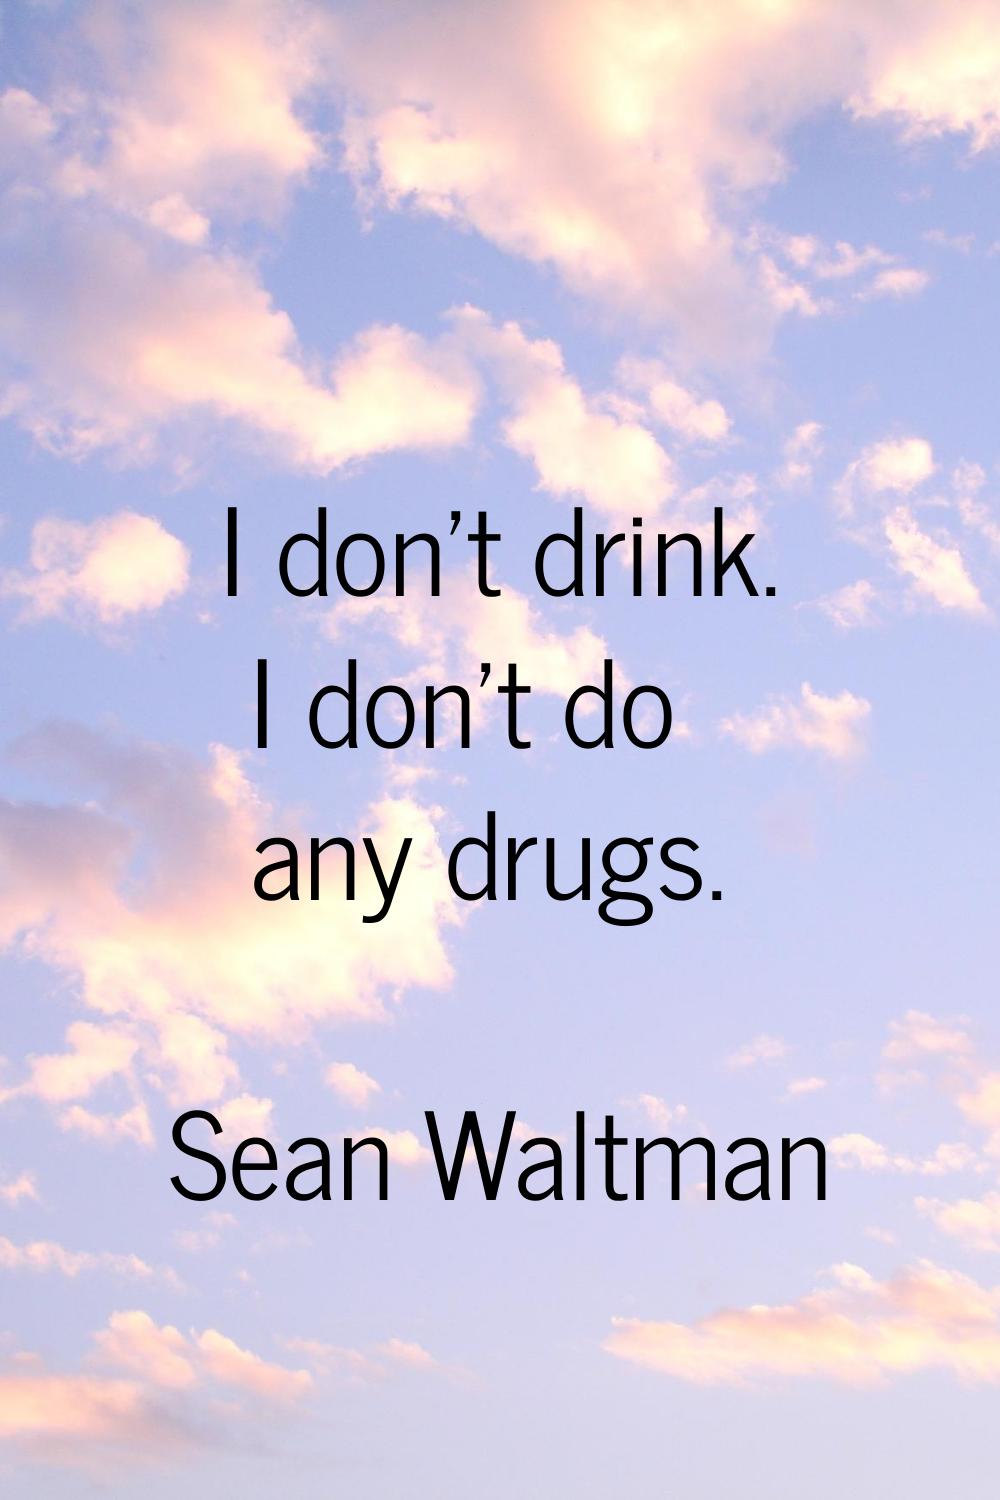 I don't drink. I don't do any drugs.